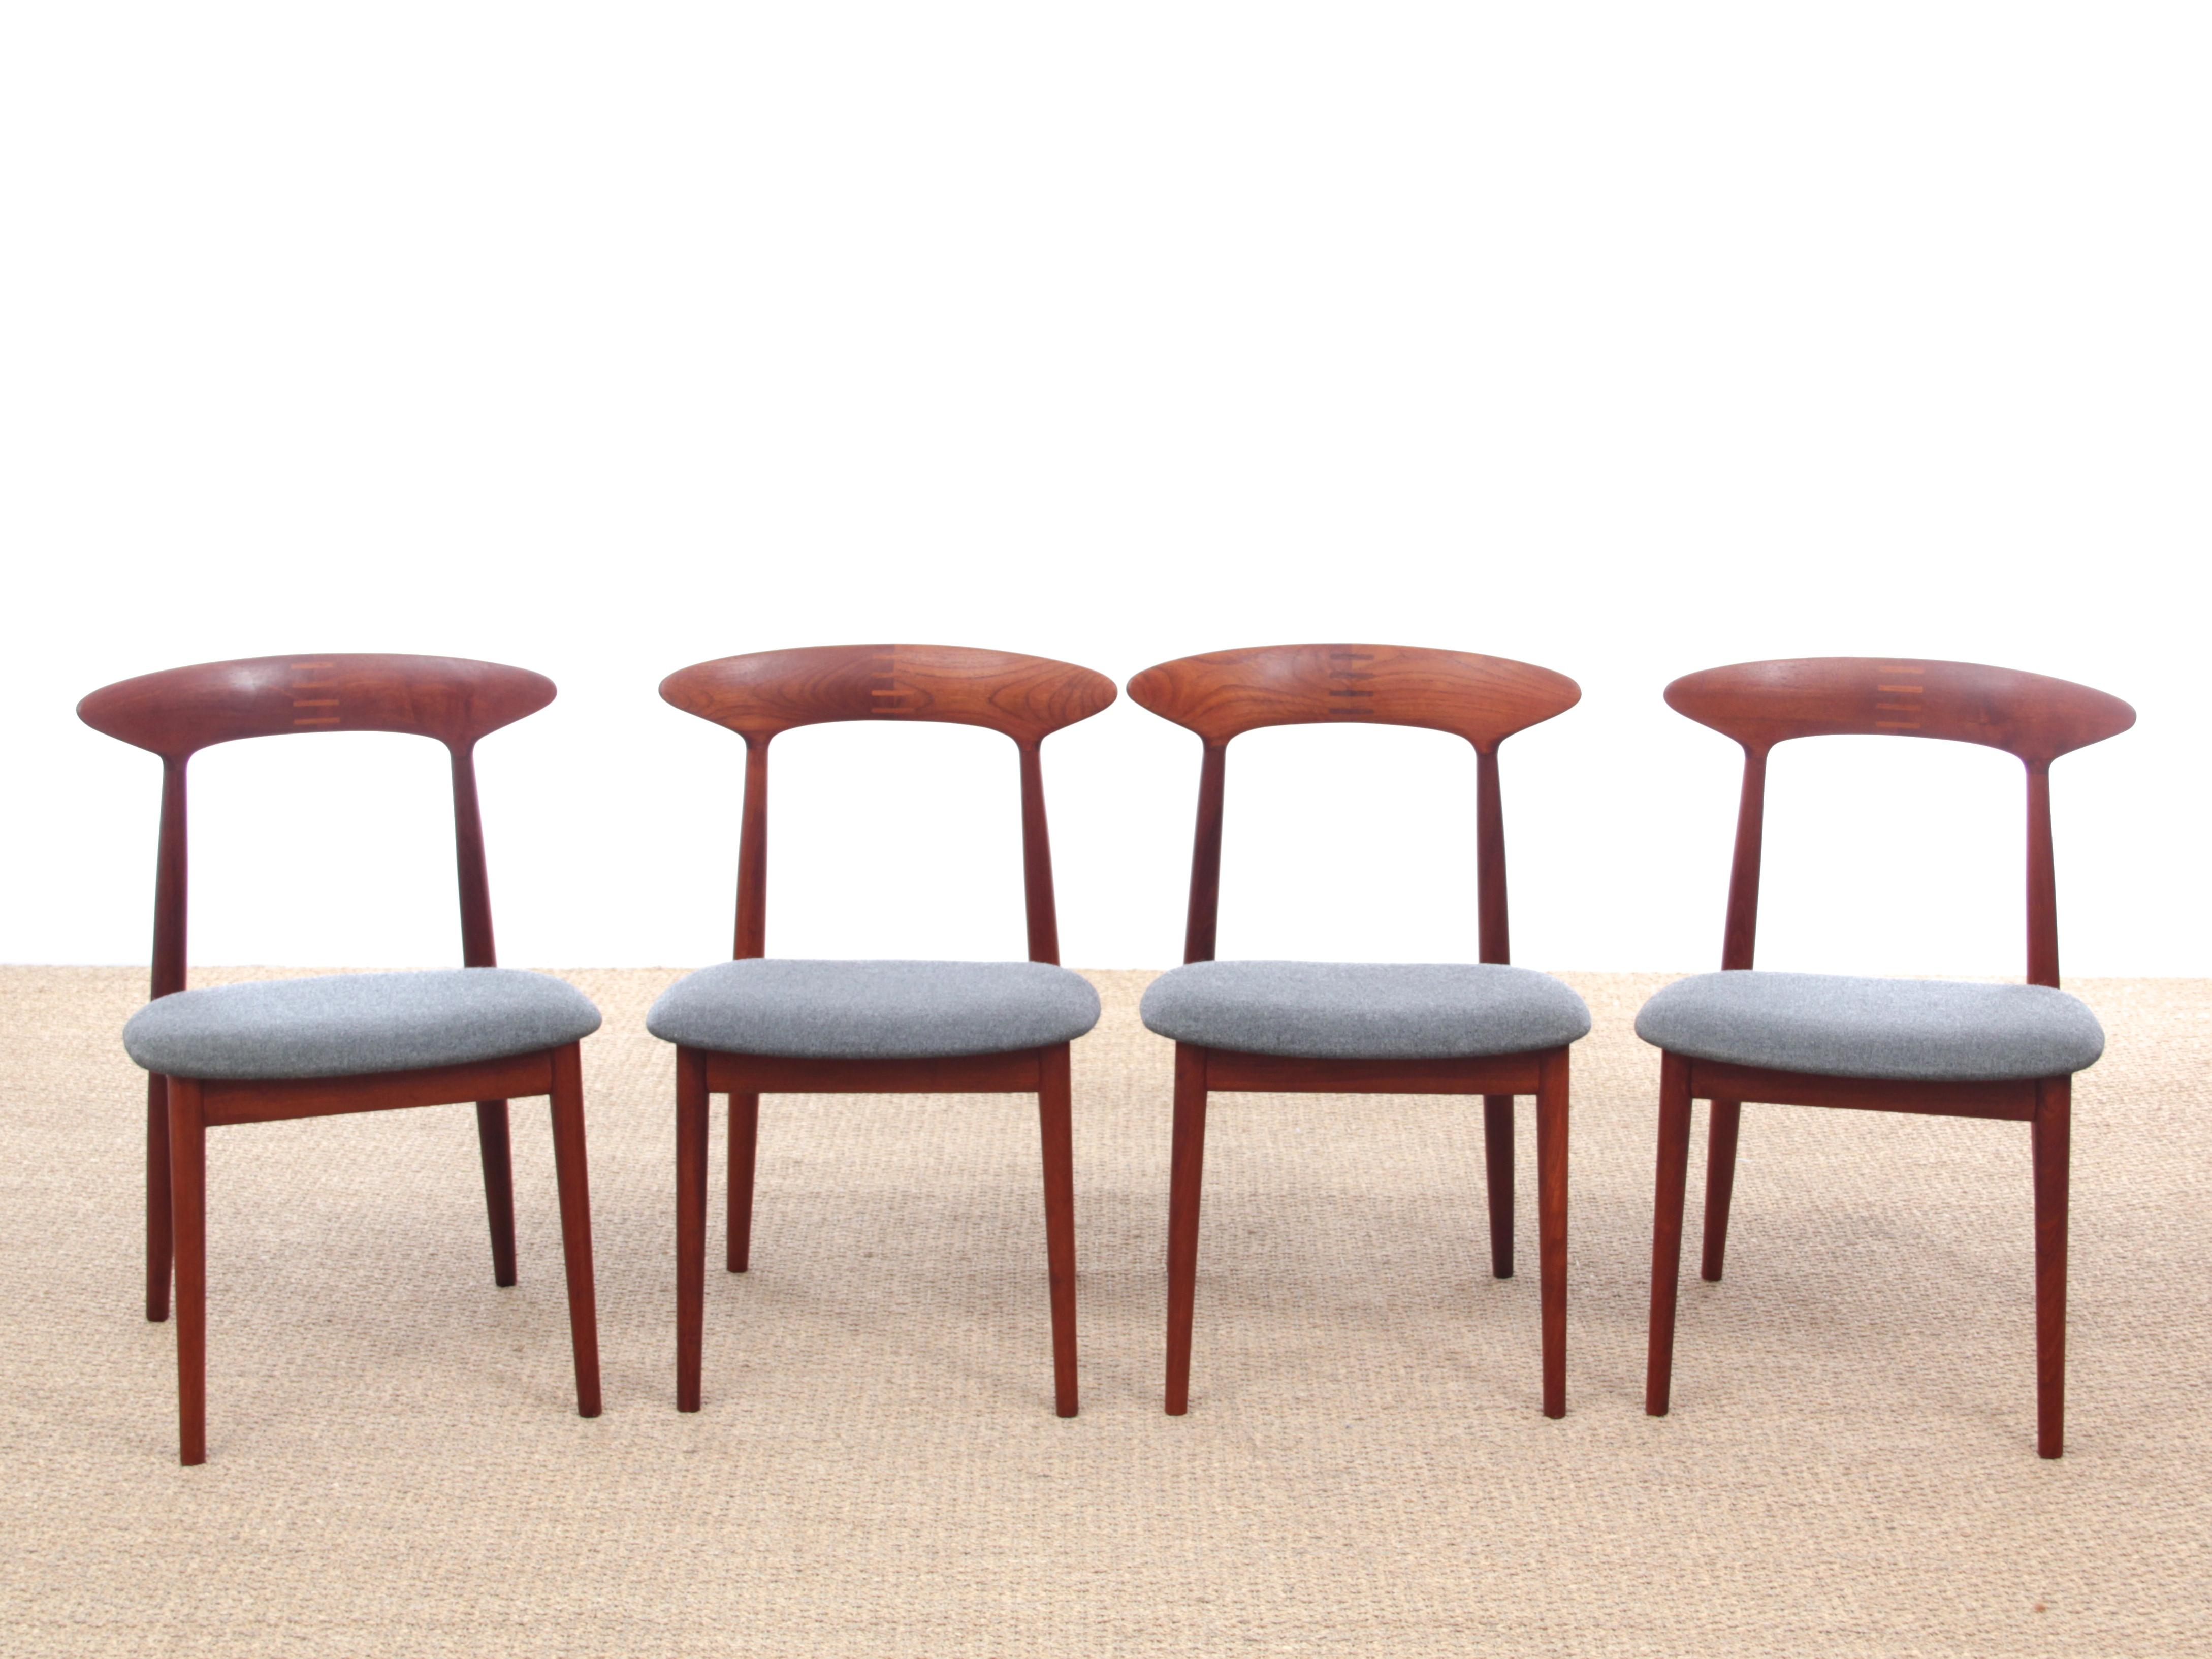 Mid-Century Modern scandinavian set of 4 teak dining chairs by Kurt Østervig. New upholstery in Kvadrat farick. 100% pure wool.